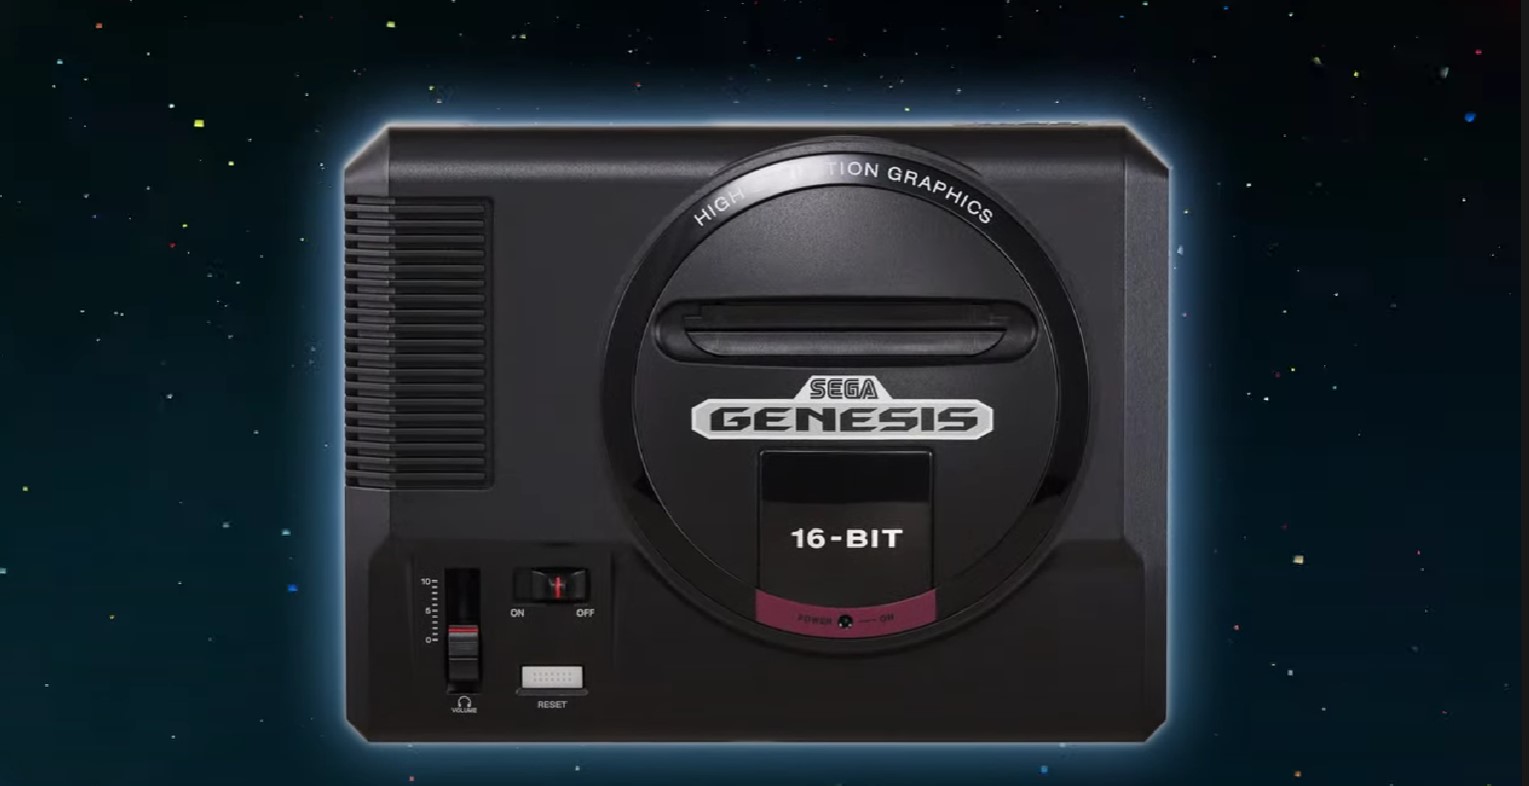 Sega Genesis Mini 2 release date announced